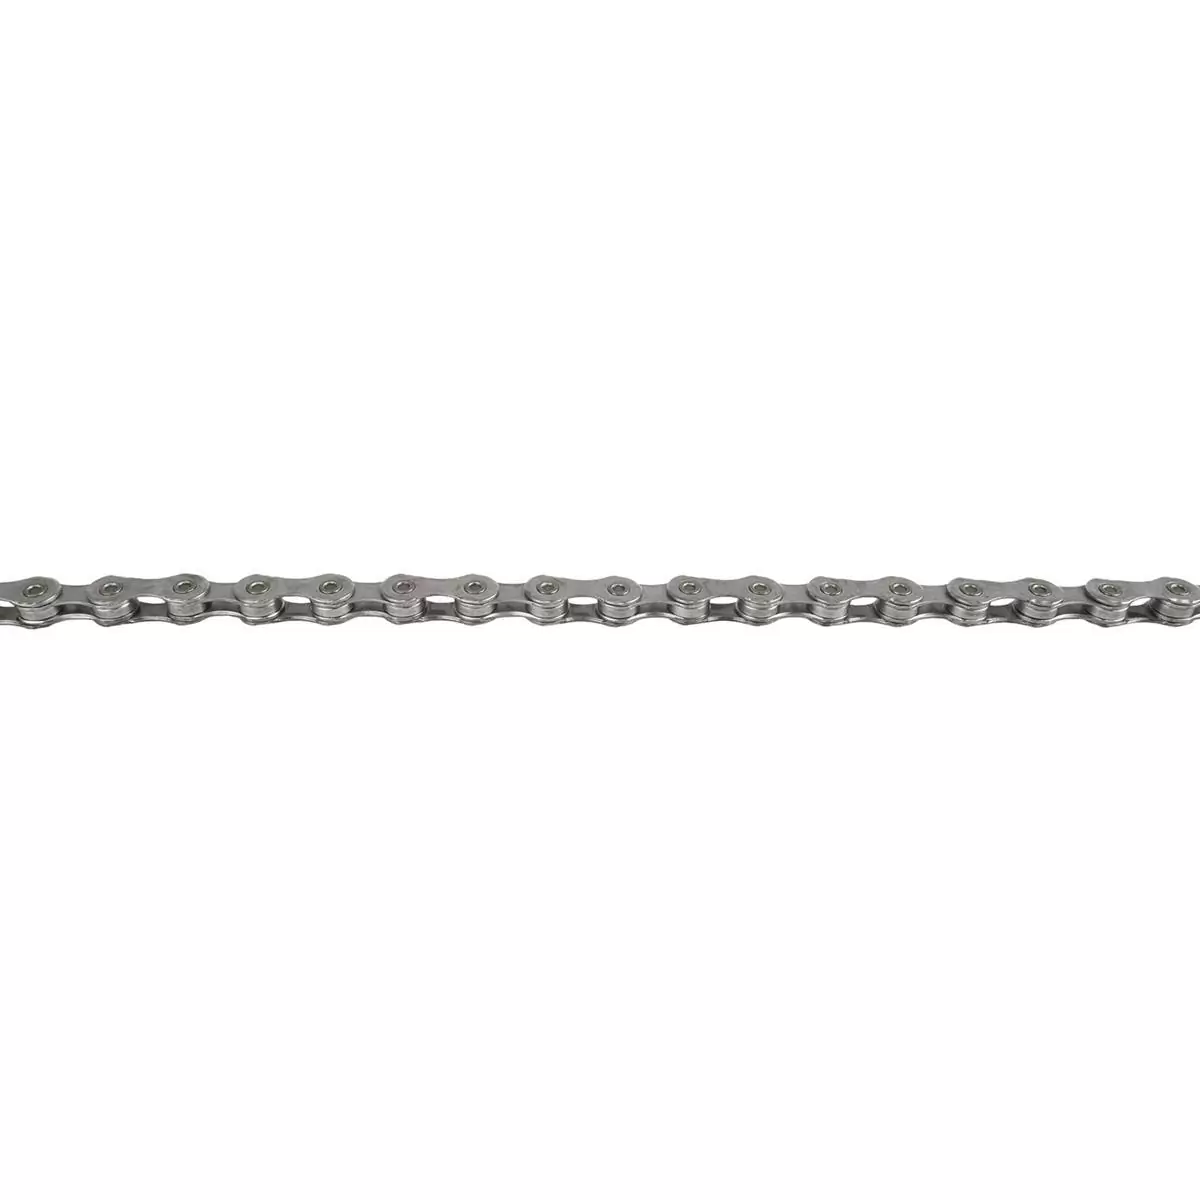 Chain Tenspeed Anti-Rust 116 links 10s silver - image